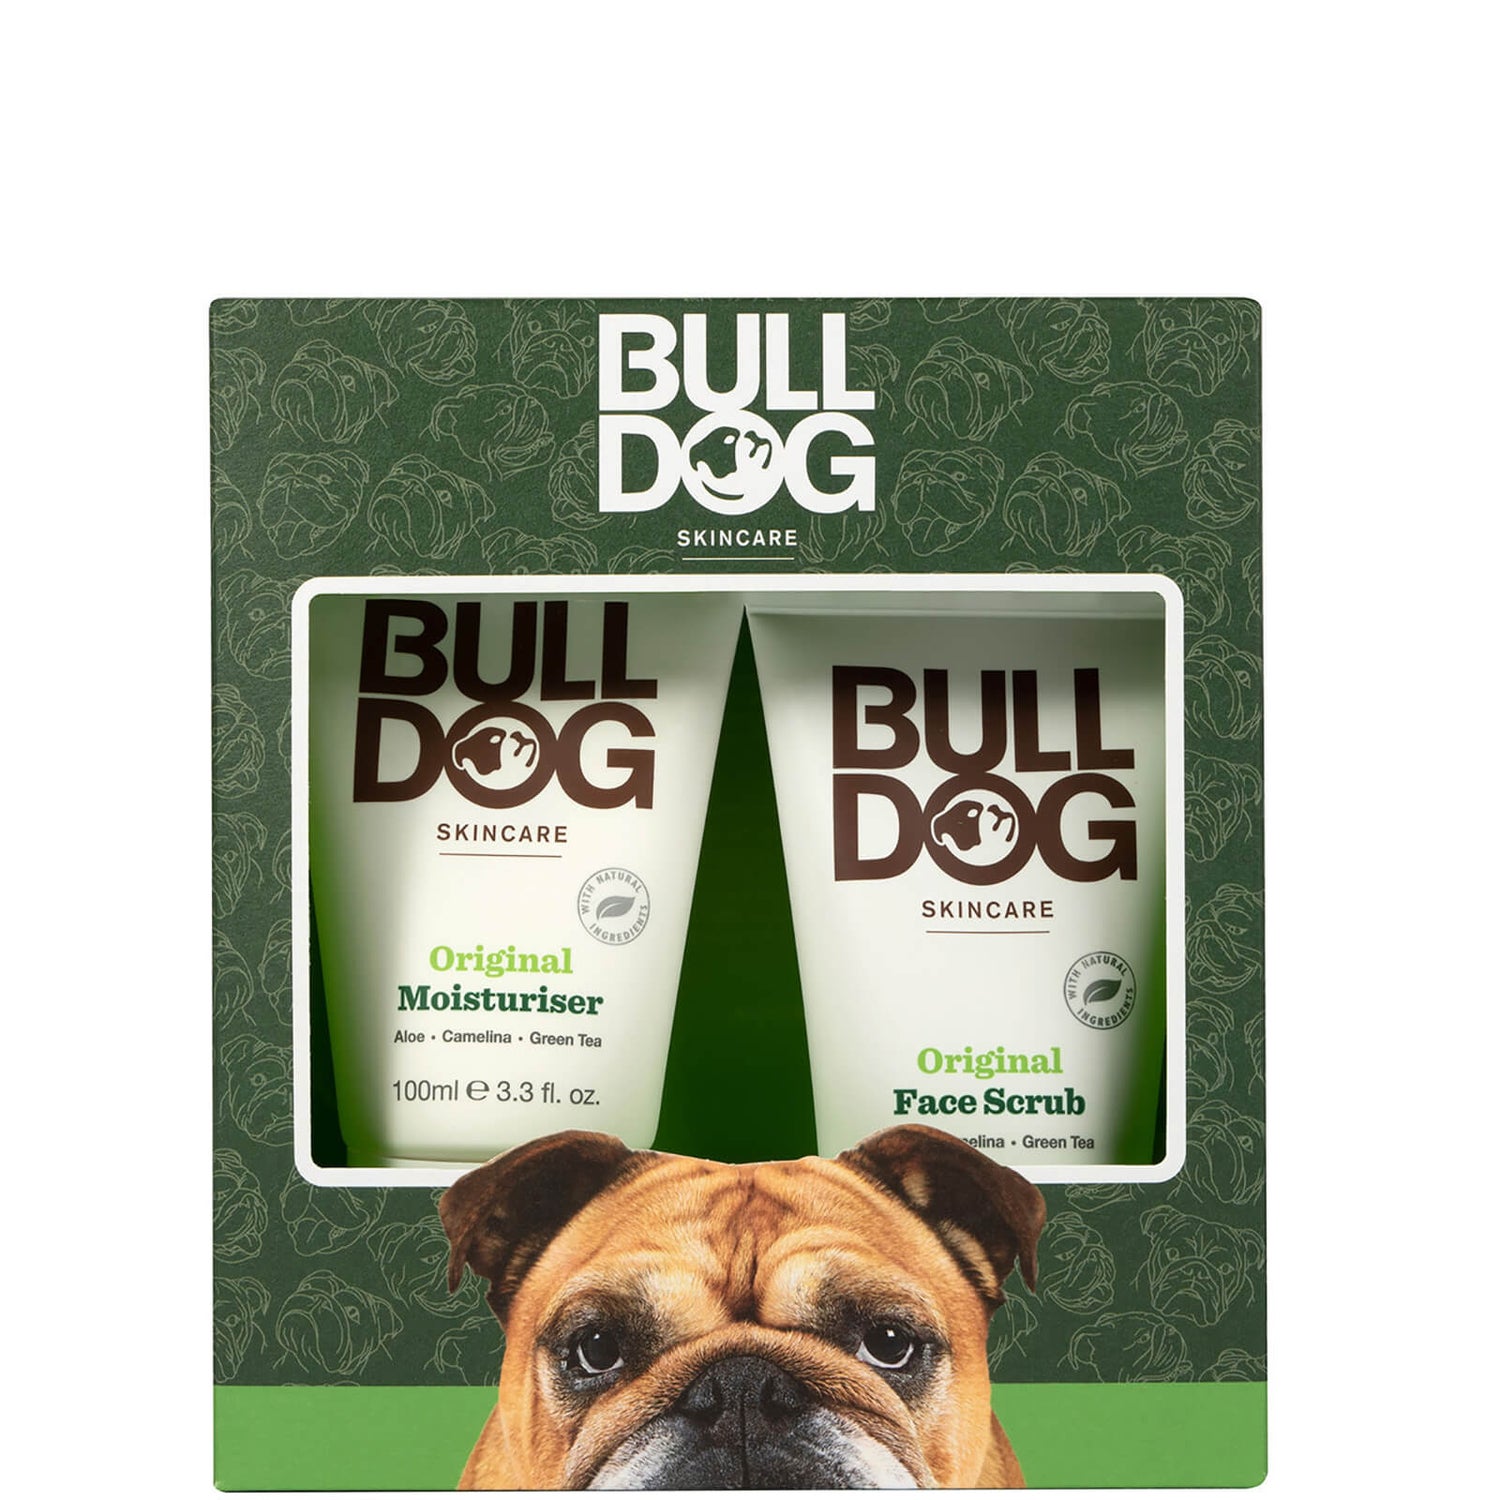 Bulldog Original Skincare Duo